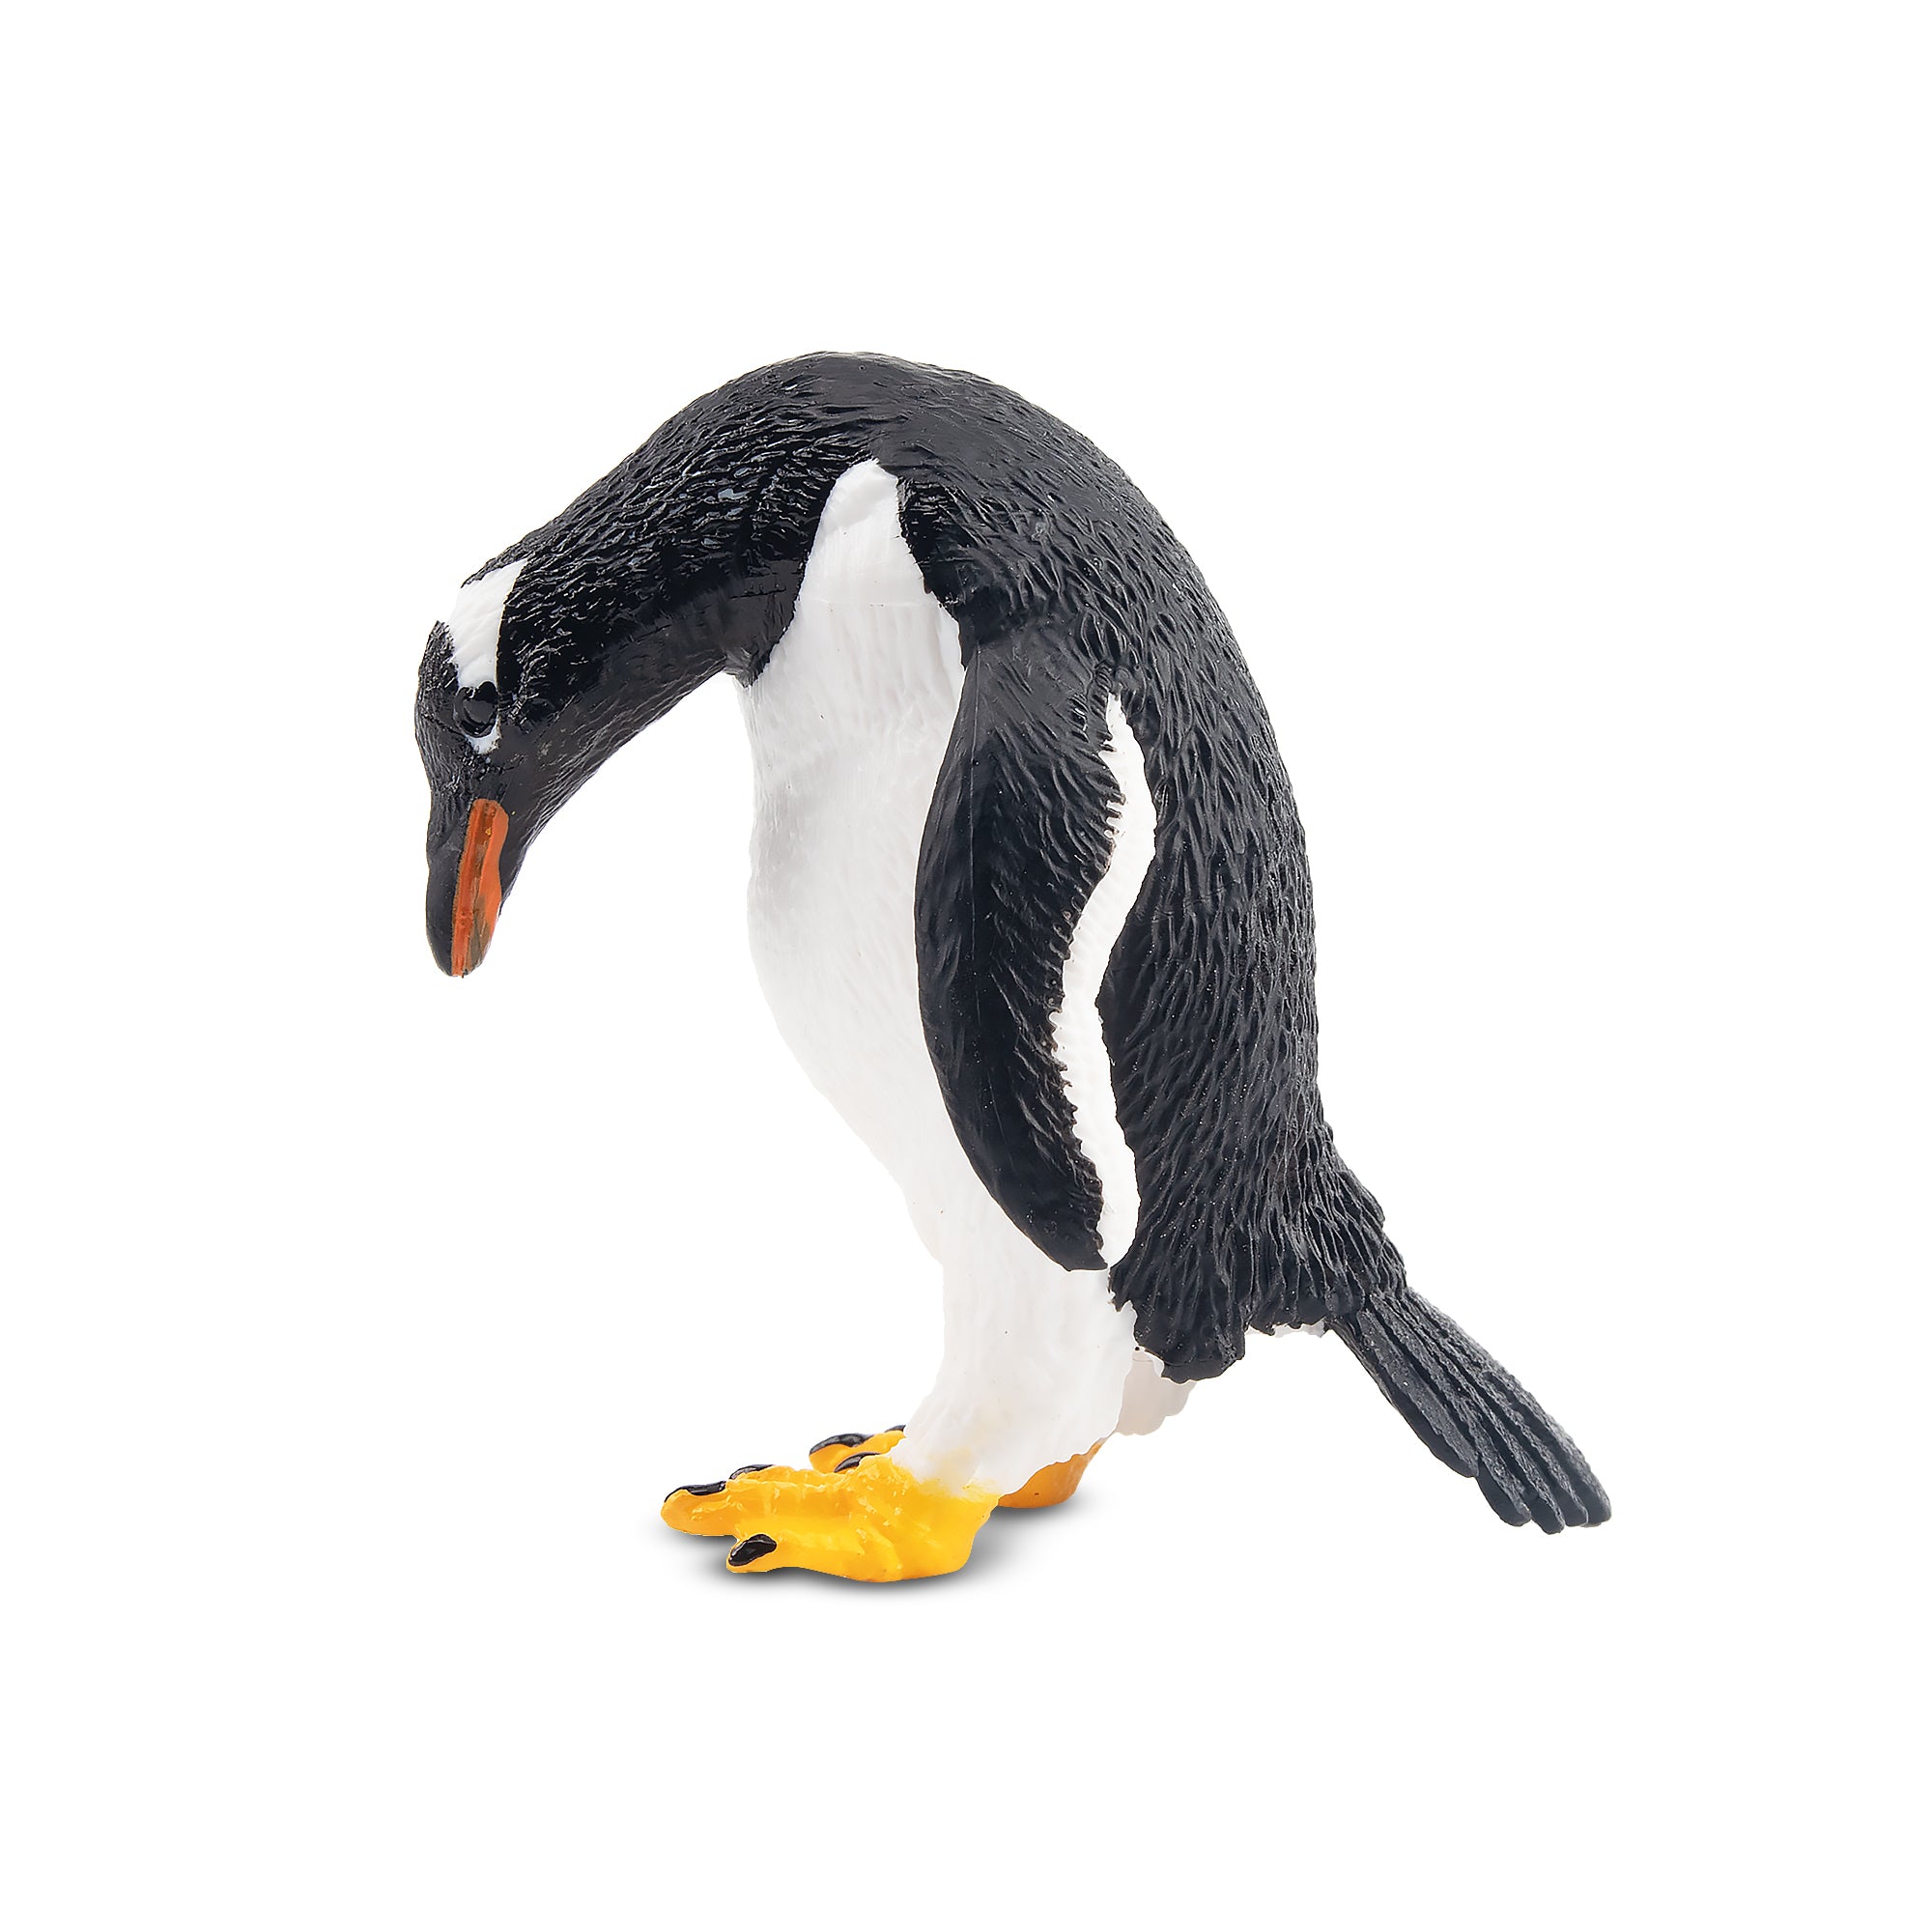 Toymany Gentoo Penguin Figurine Toy